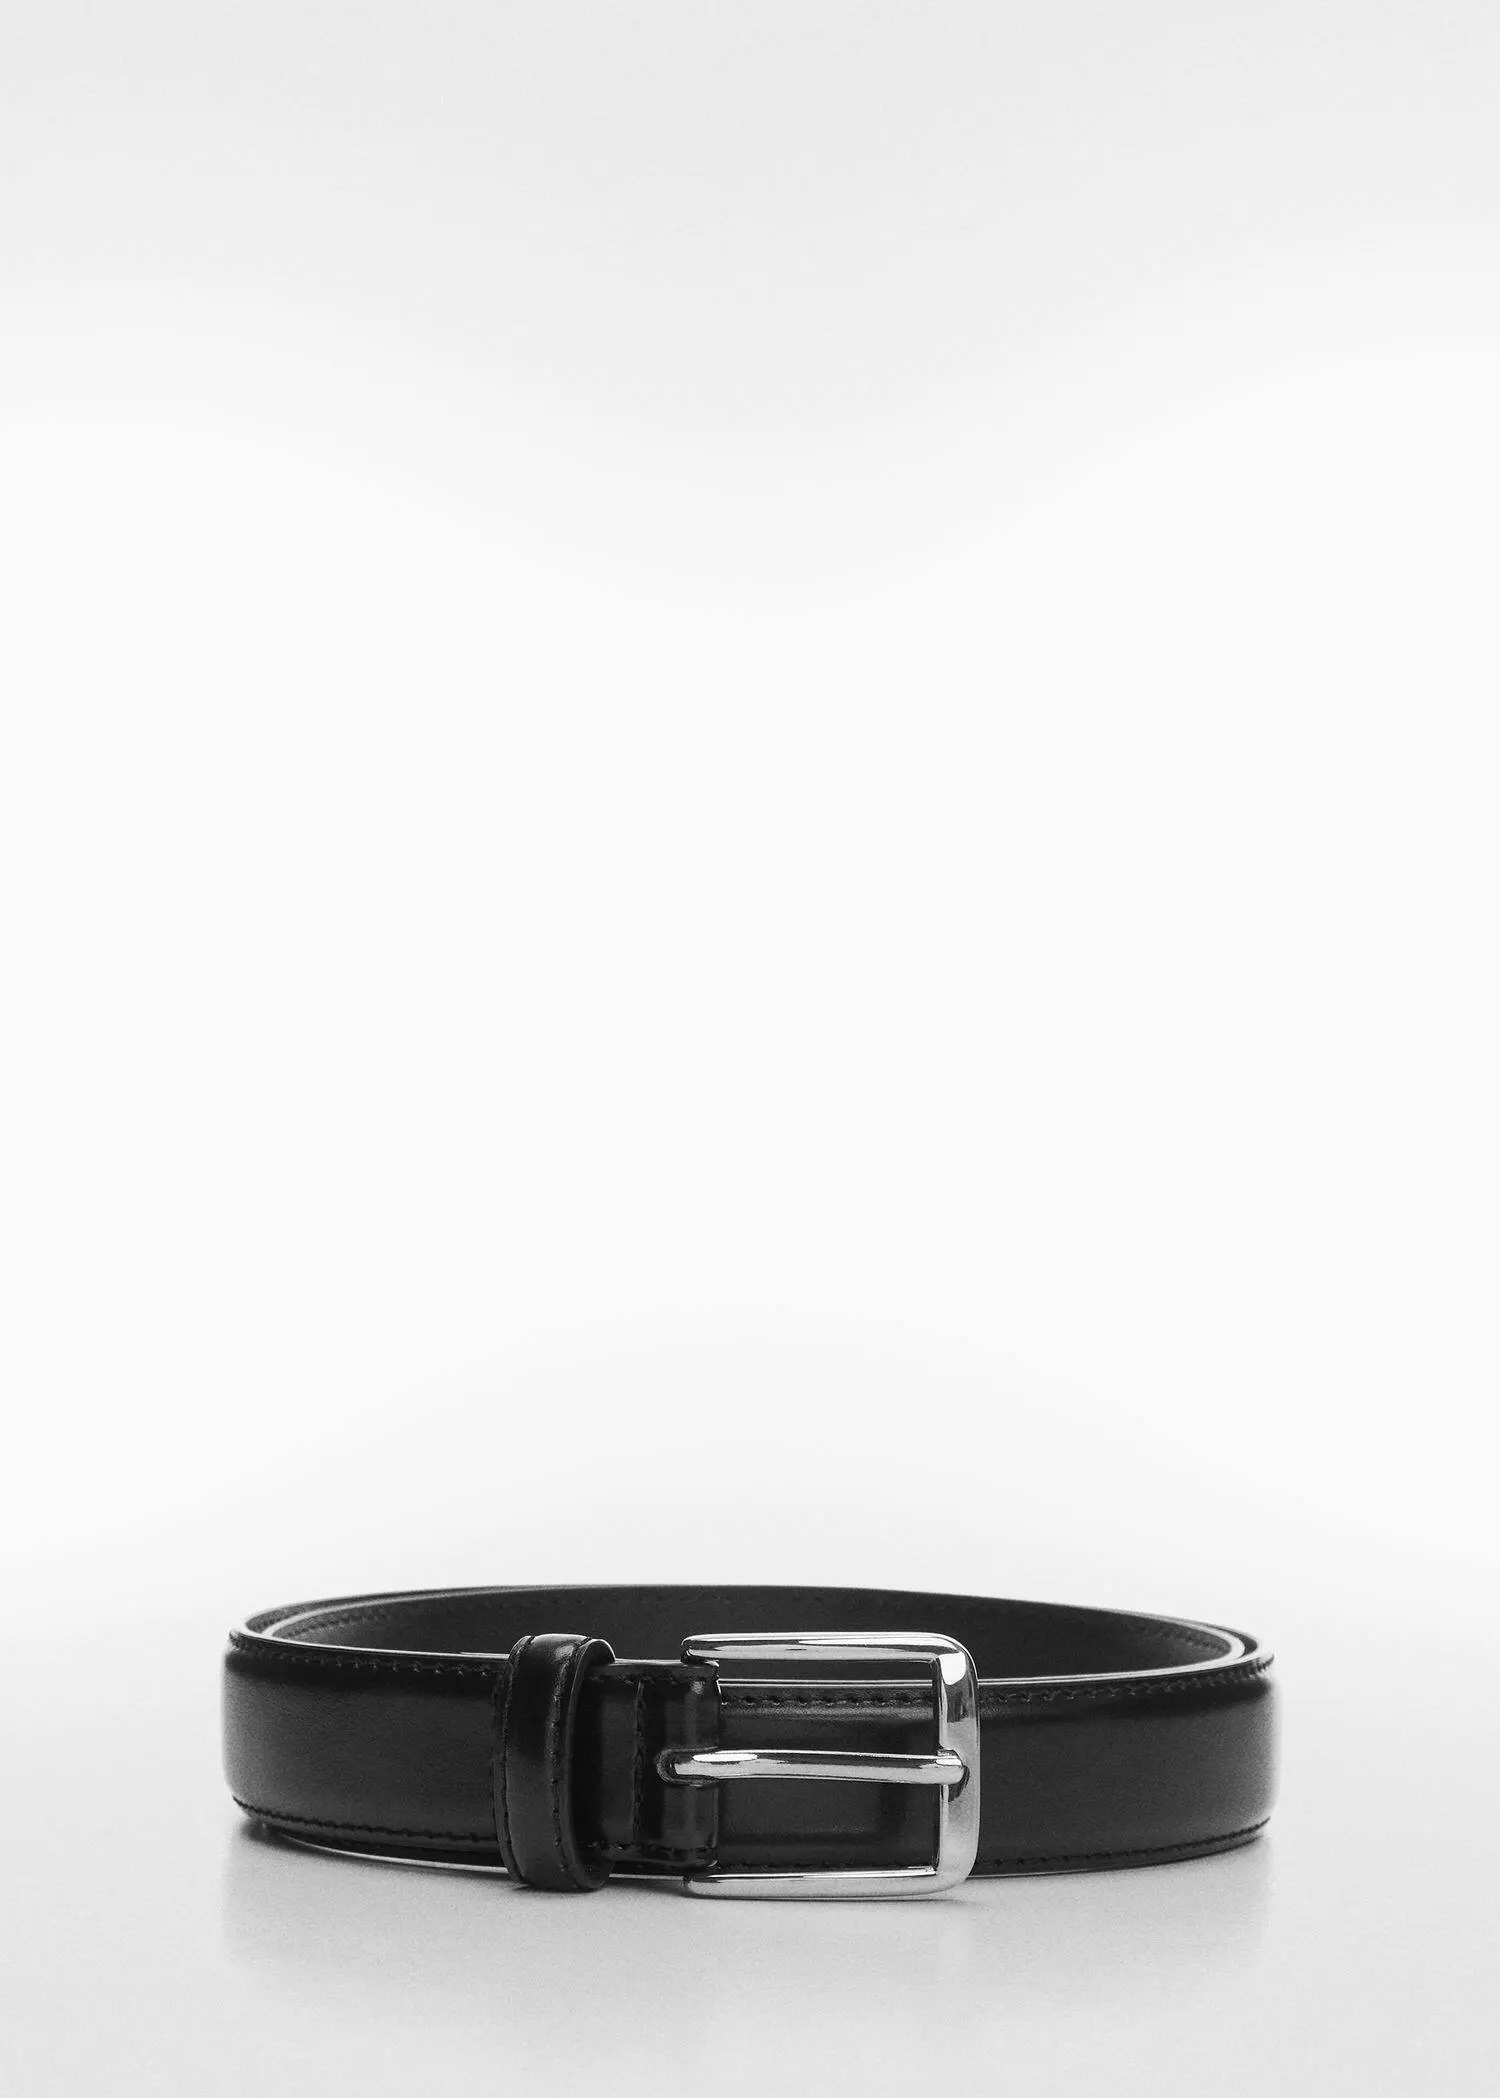 Mango Leather belt. a close up of a belt on a white background 